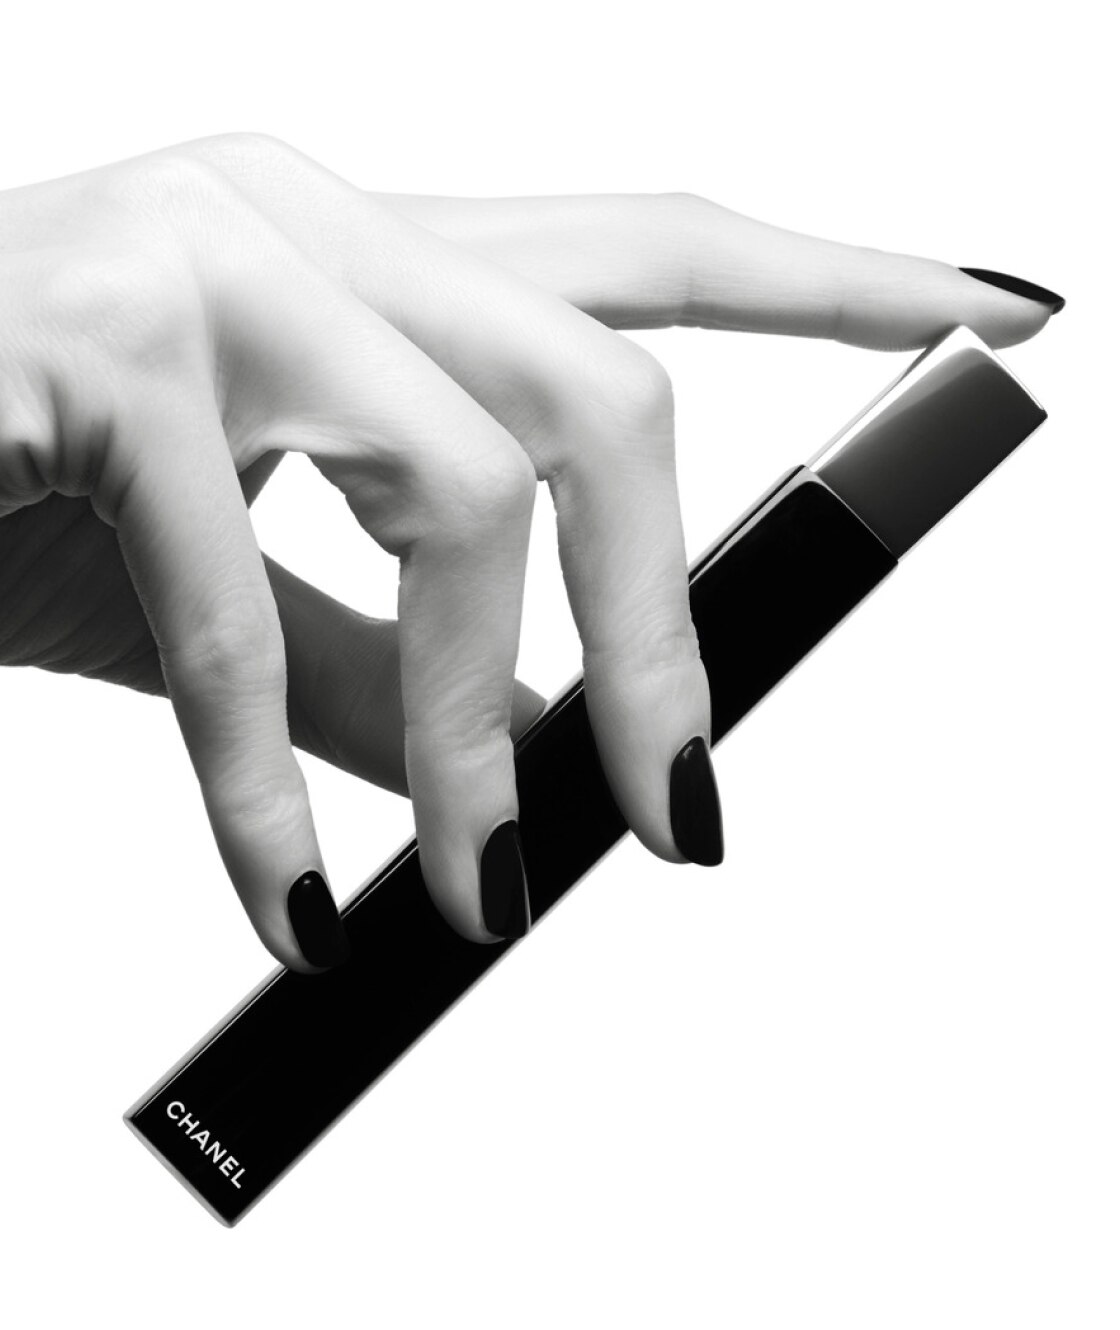 Hand holding Noir Allure Mascara product